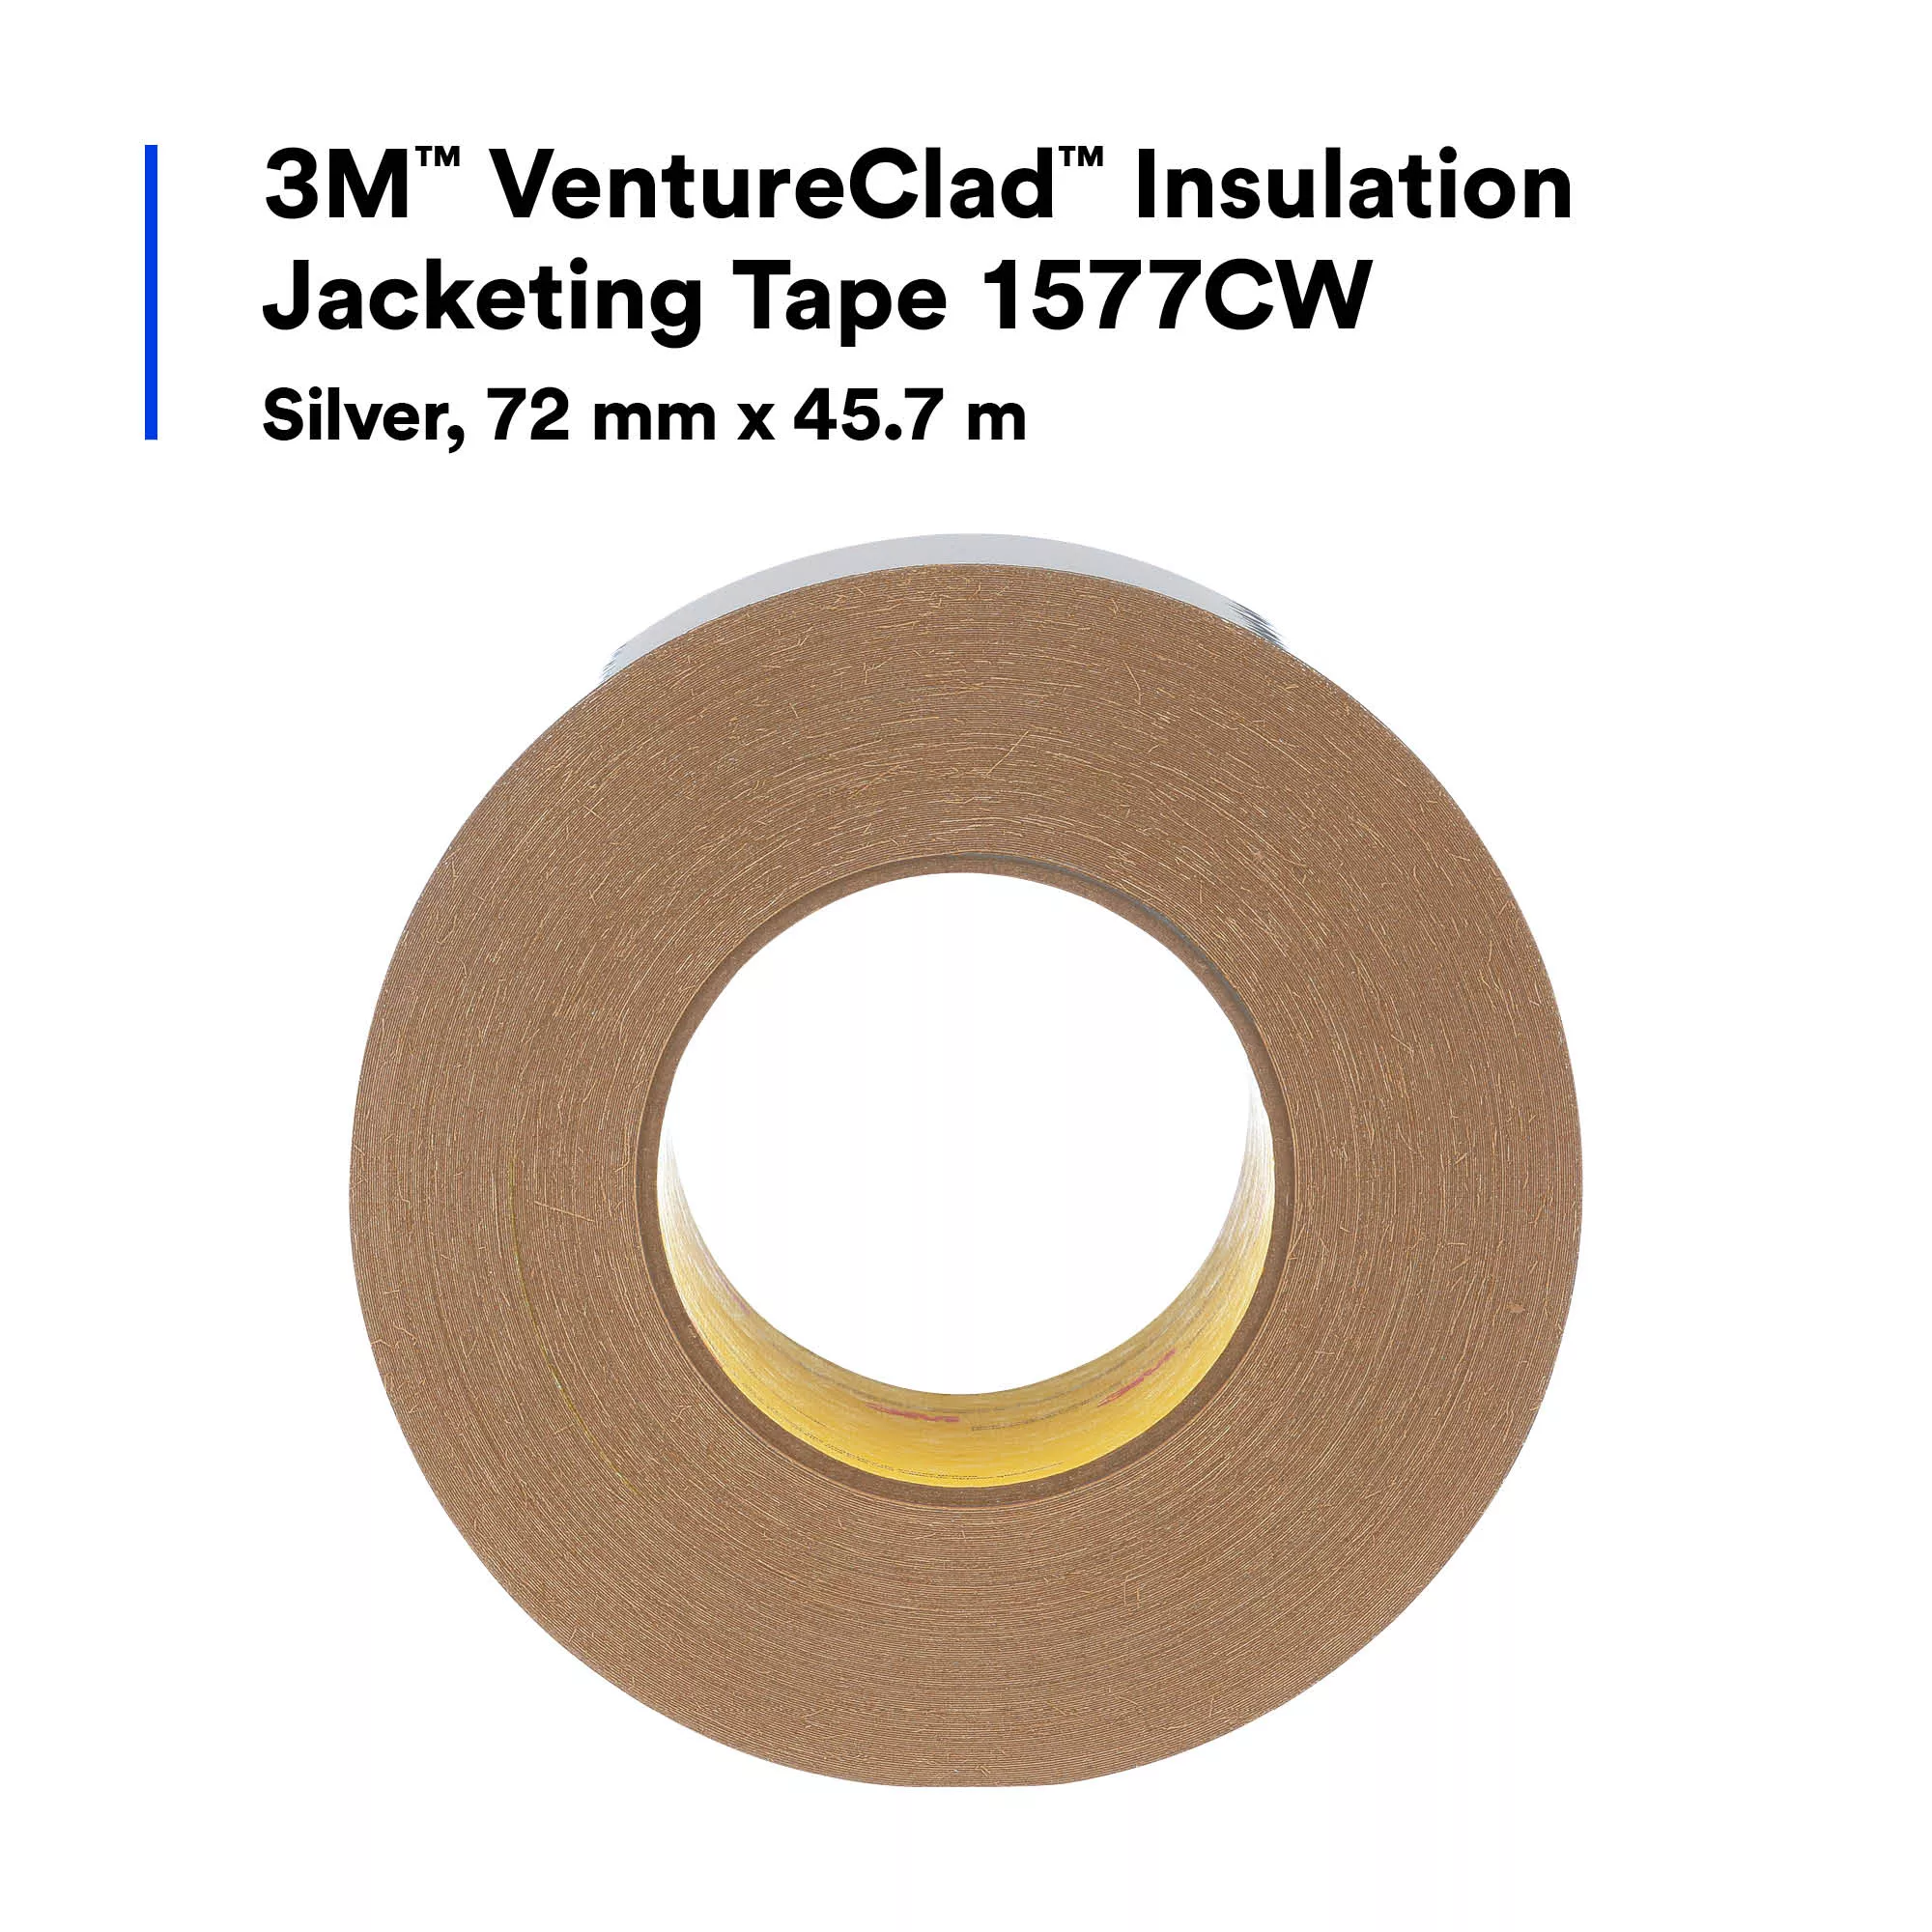 3M™ VentureClad™ Insulation Jacketing Tape 1577CW, Silver, 72 mm x 45.7
m, 16 Rolls/Case